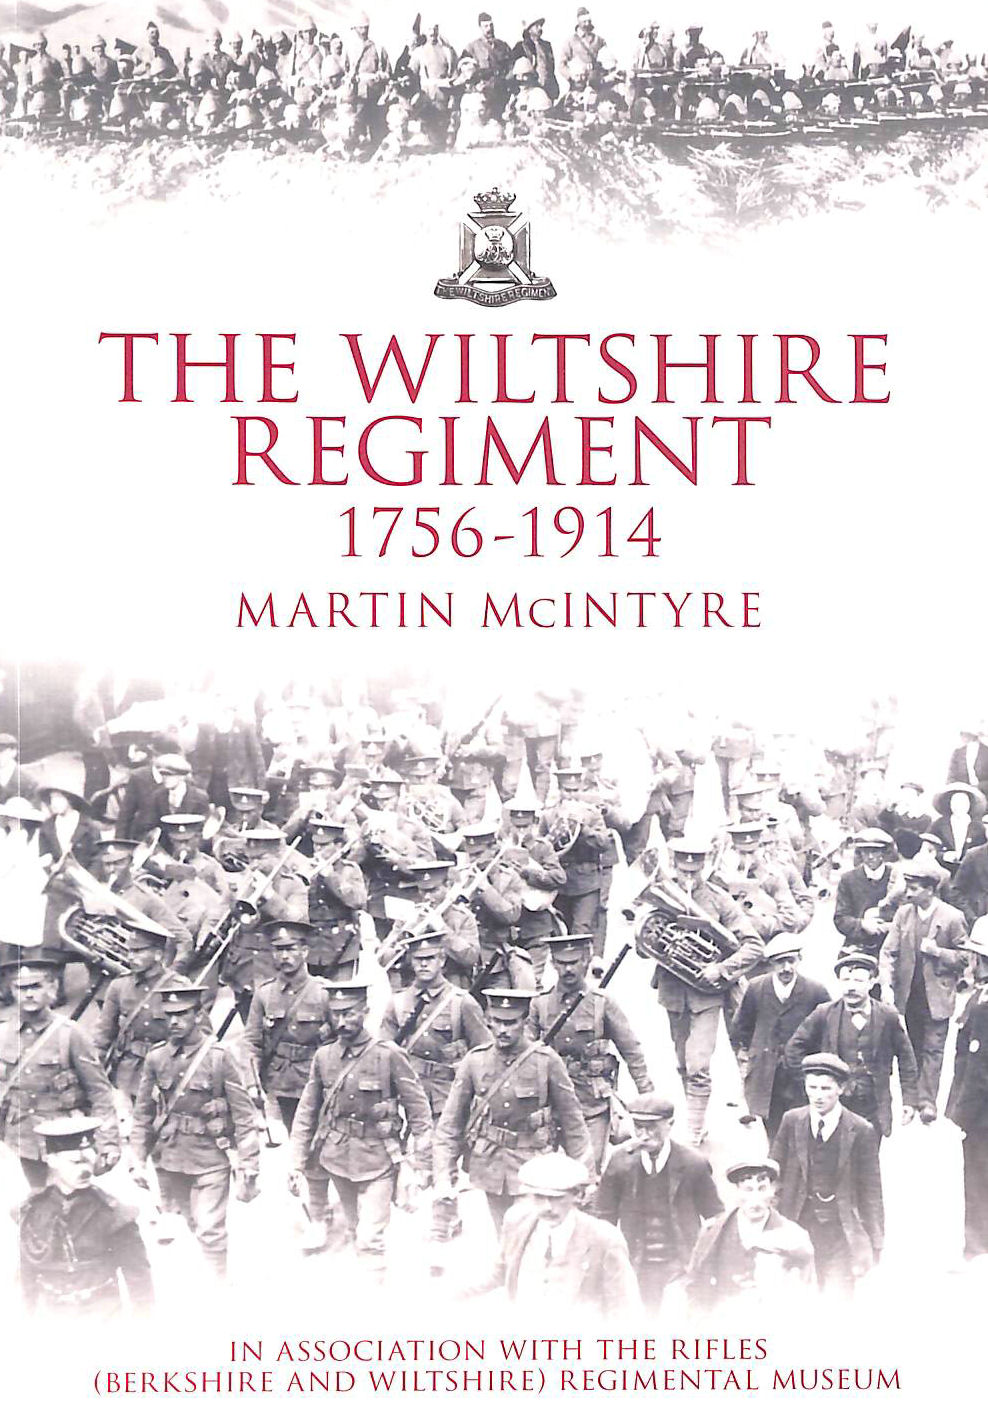 MARTIN MCINTYRE - The Wiltshire Regiment 1756-1914